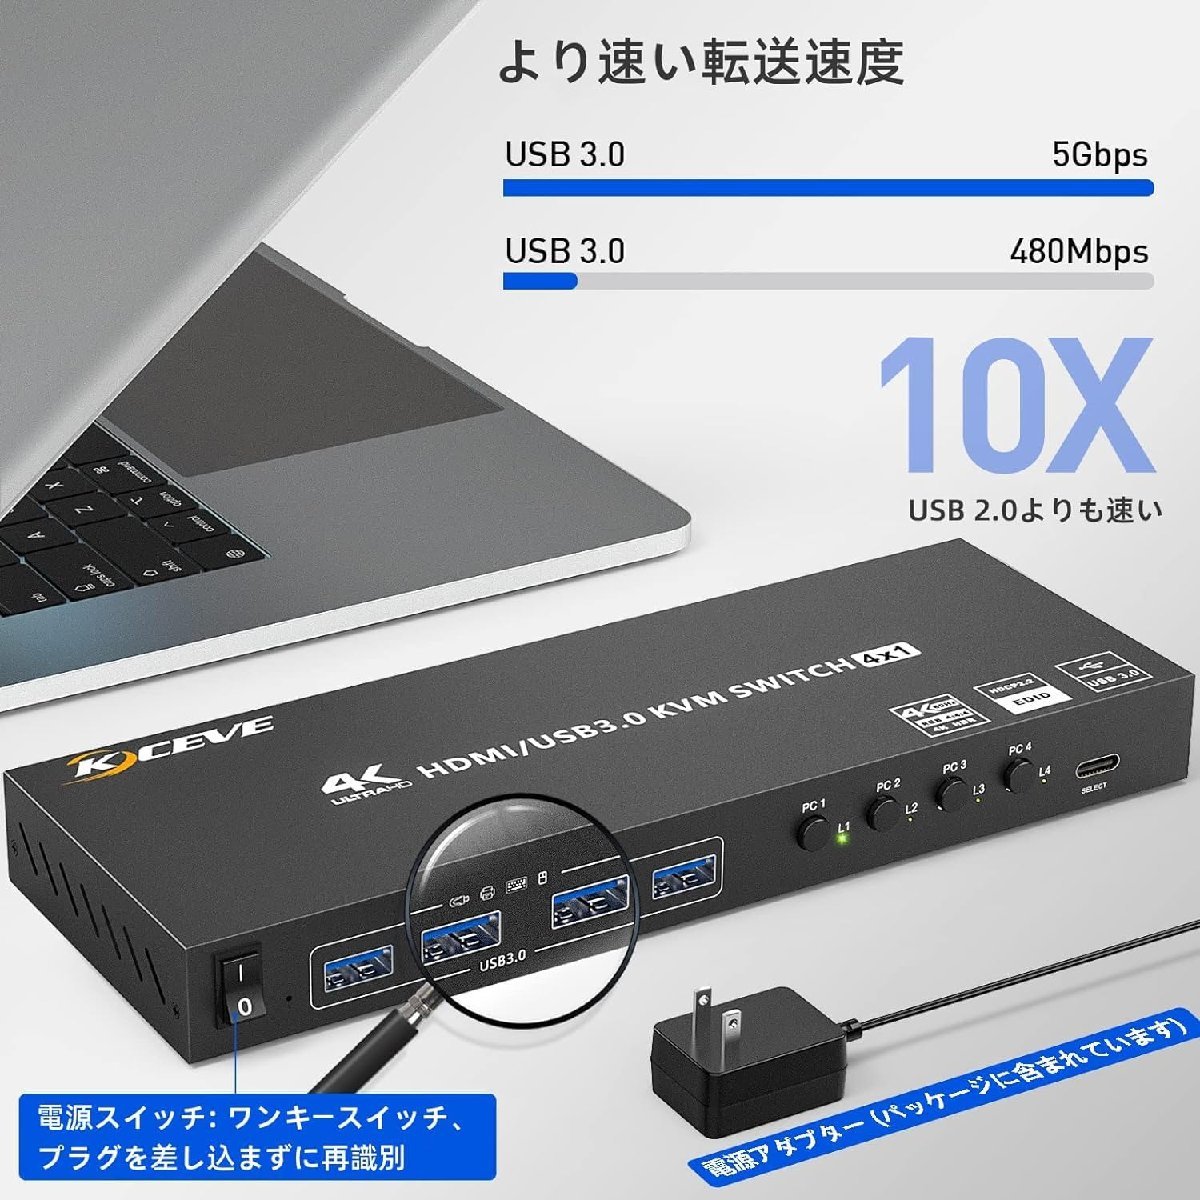  free shipping *HDMI KVM switch 4 port 4 input 1 output PC switch 4.USB3.0 hub equiped KVM HDMI EDID control 